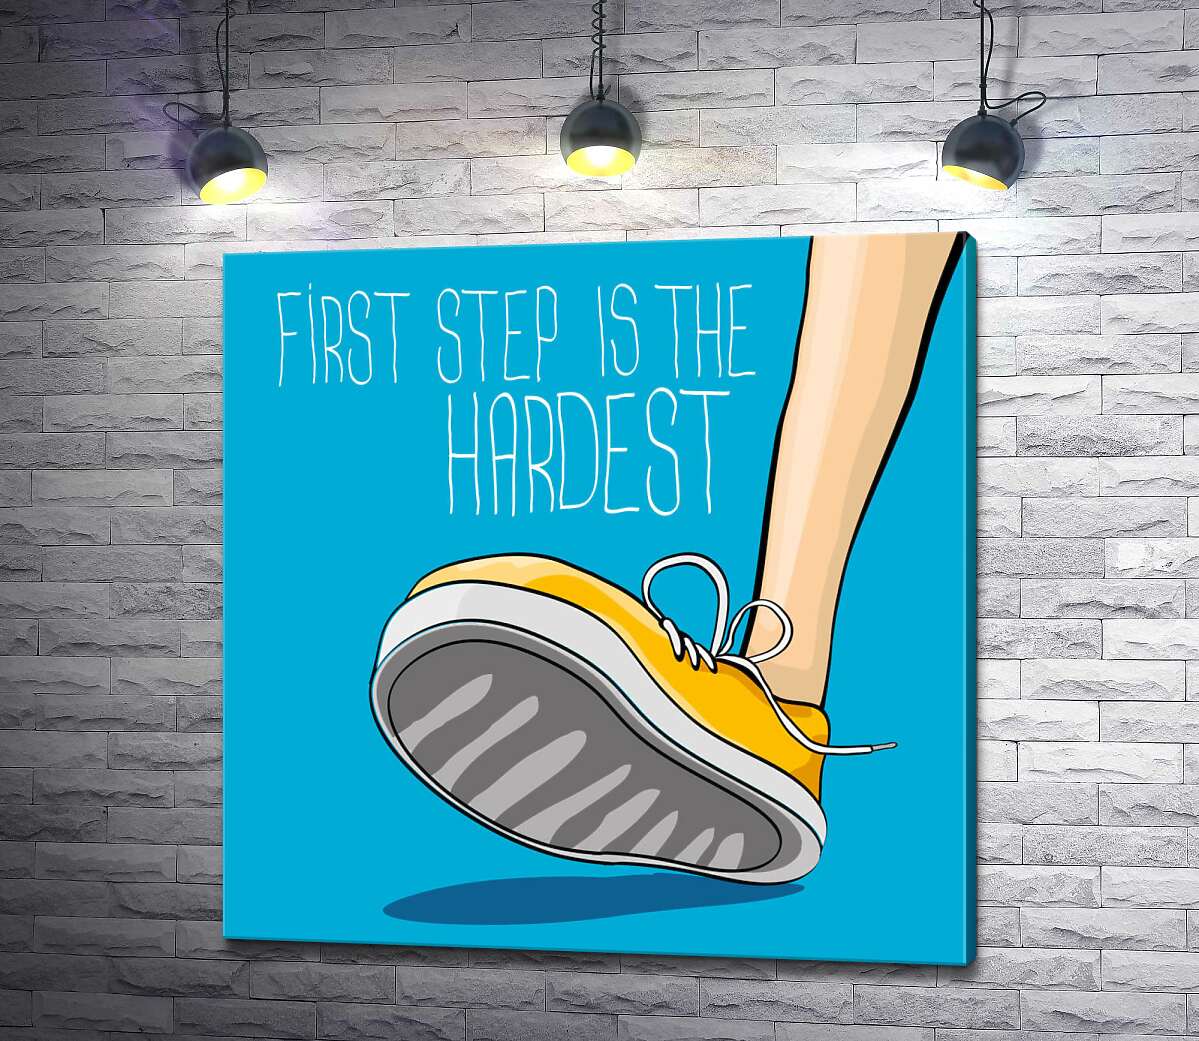 картина Желтый кроссовок ступает на землю рядом с фразой "first step is the hardest"